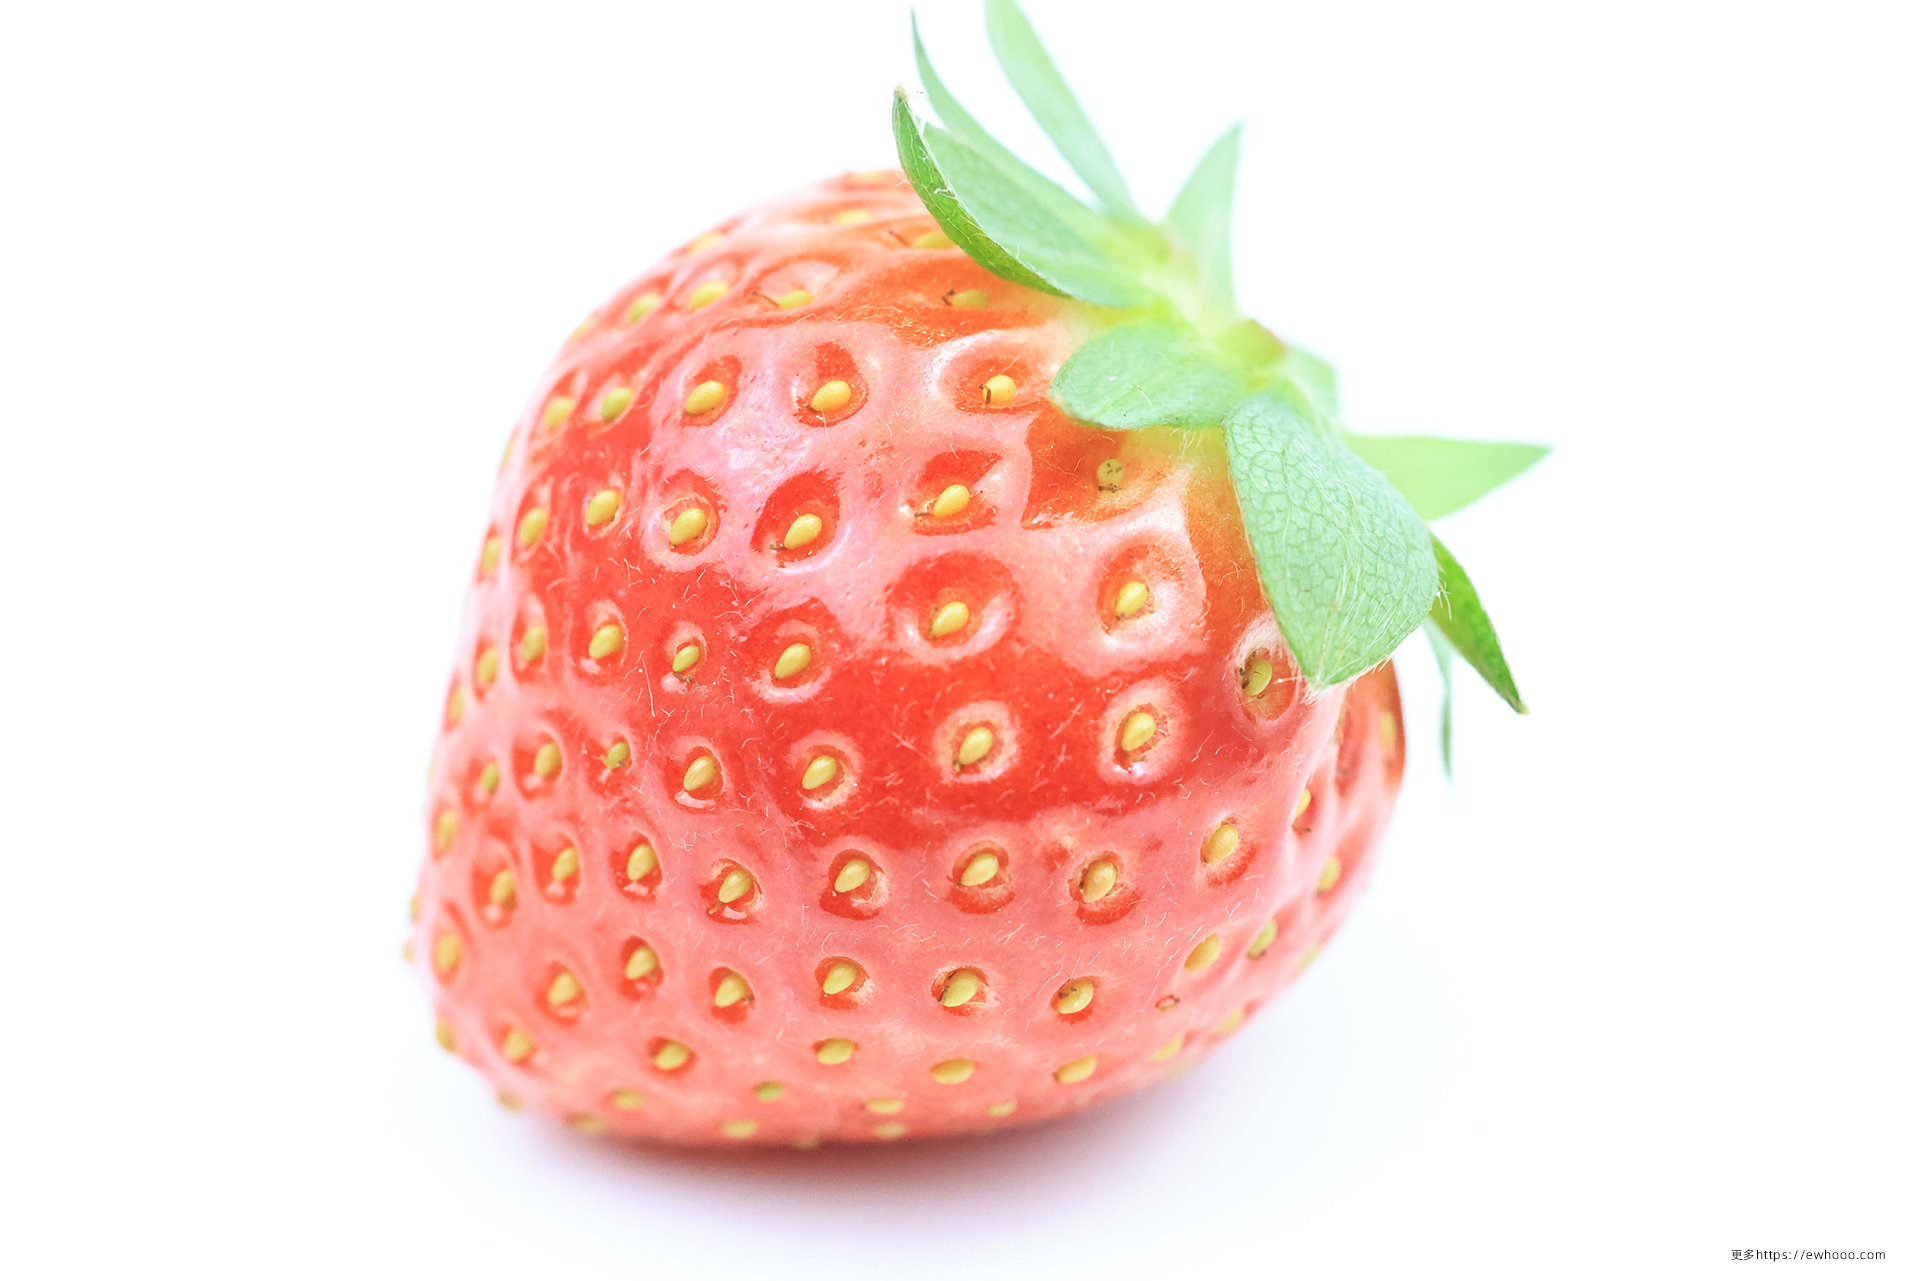 General 1920x1281 strawberries fruit food white background simple background macro closeup